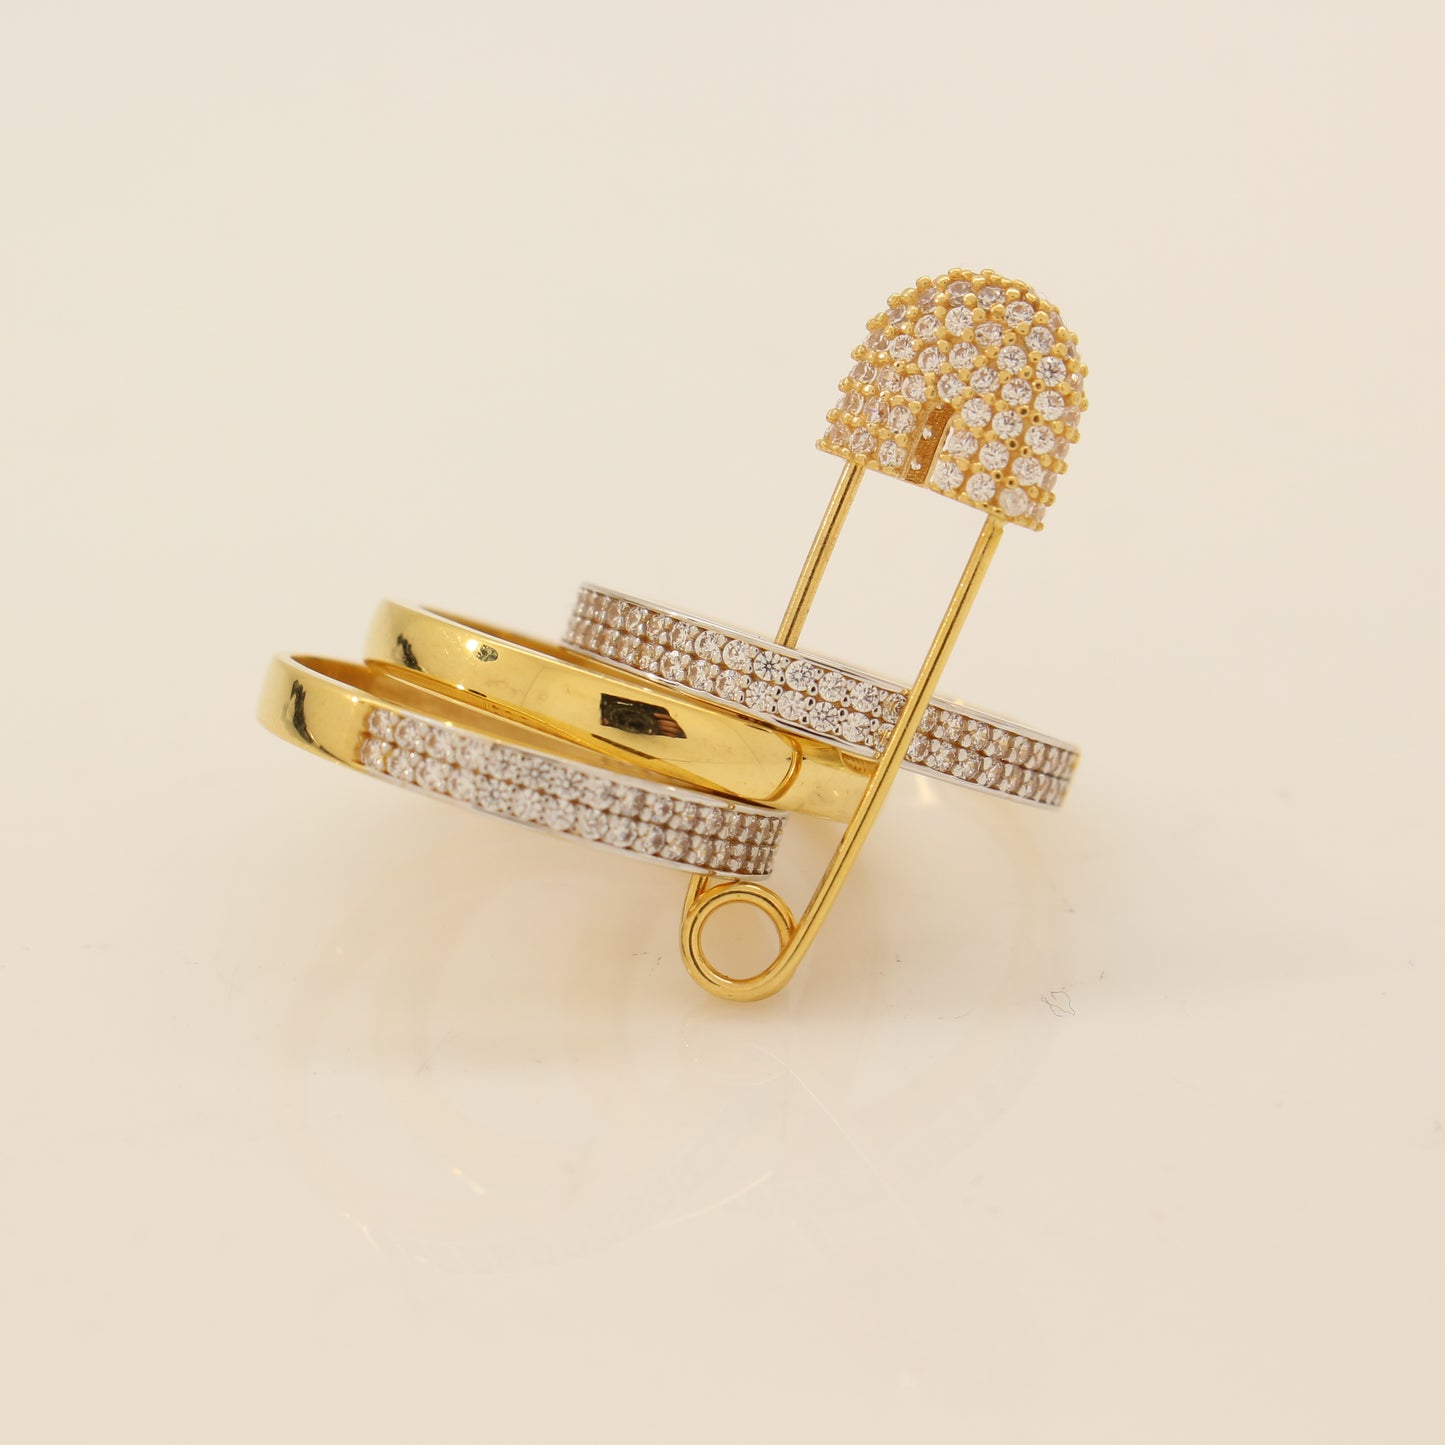 21K Gold Pin-Stacked Ring